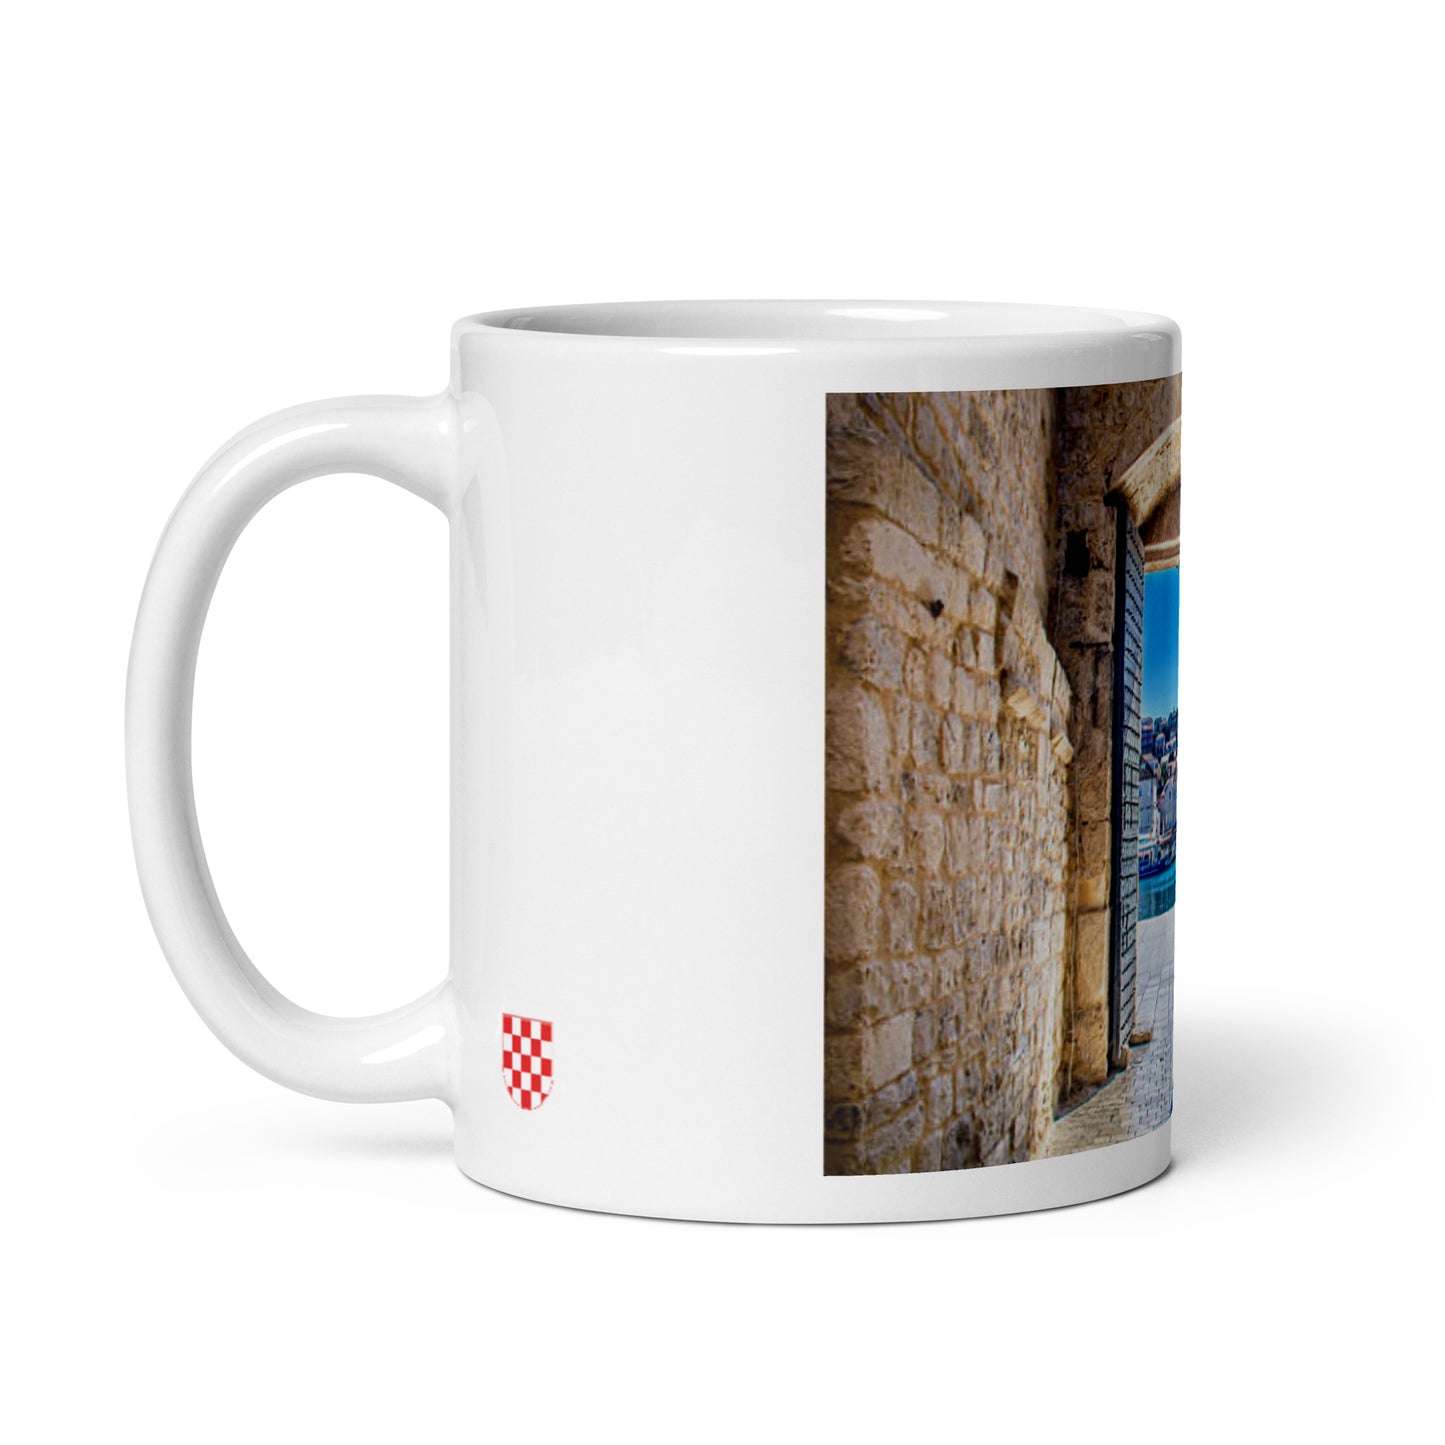 Croatian Coast 2 White glossy mug